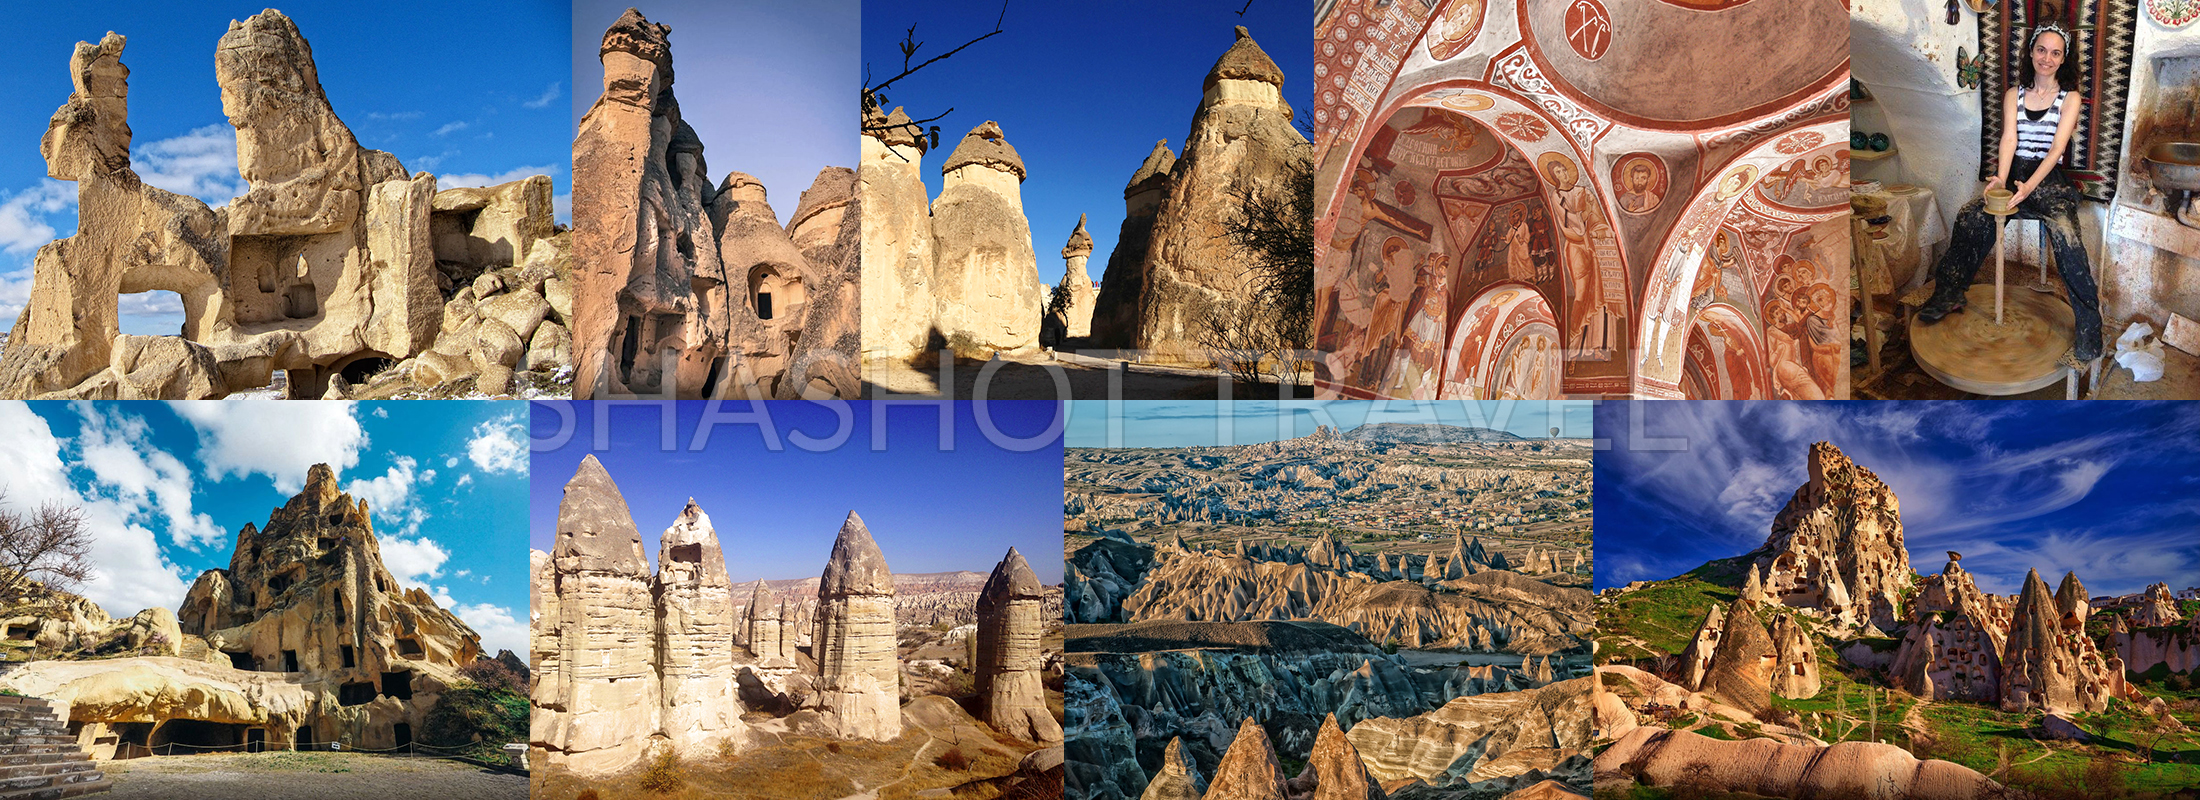 cappadocia-turkiye-shashot-travel-red-tour